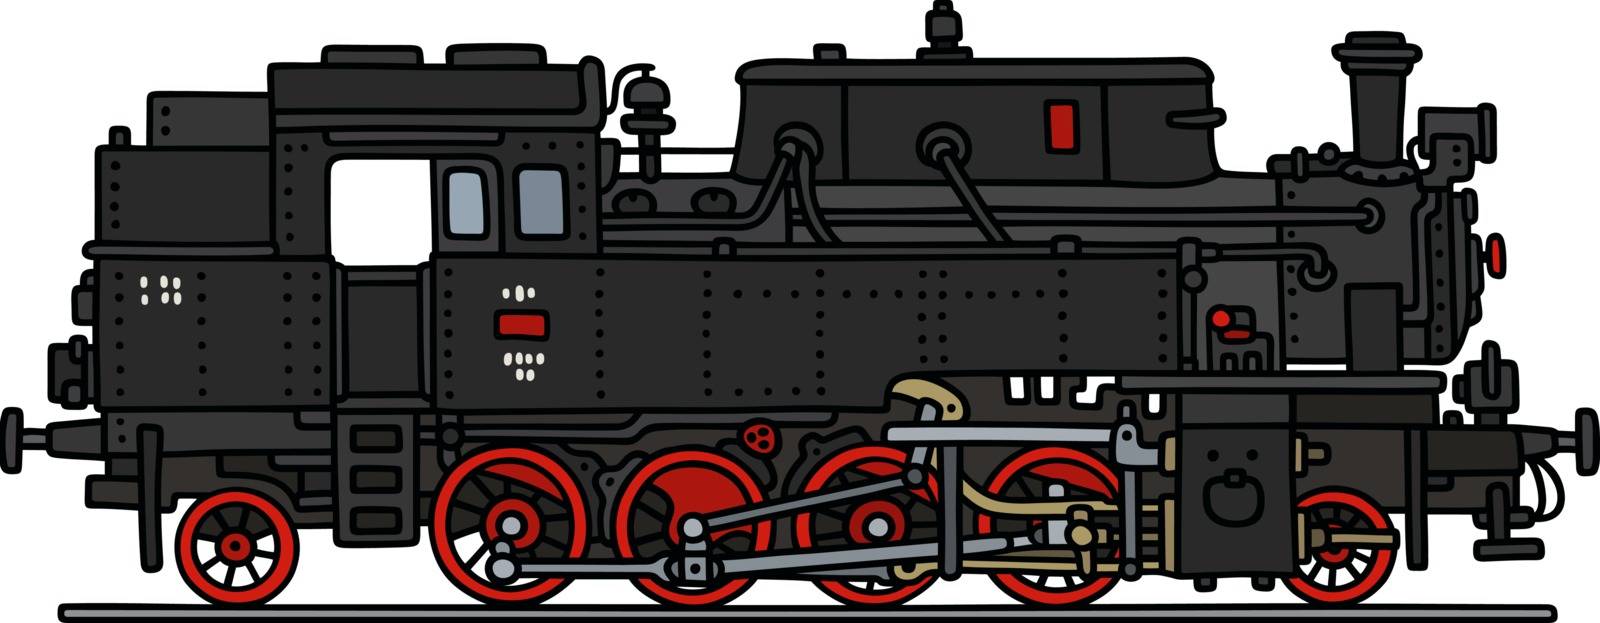 The vintage steam locomotive by vostal